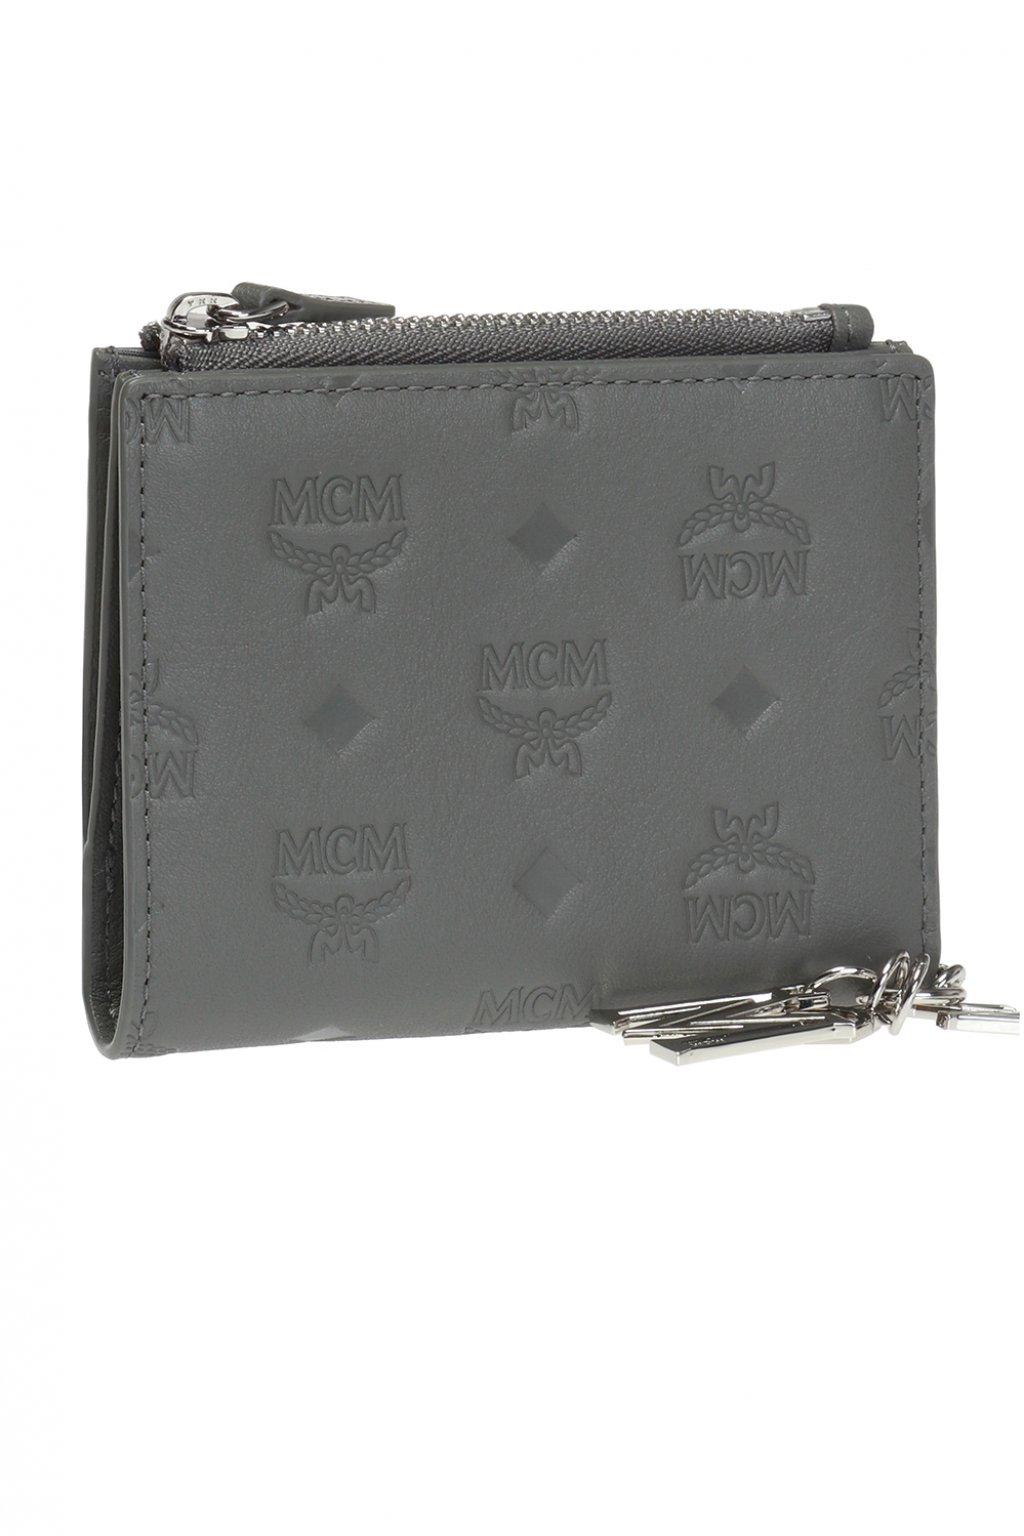 MCM Leather Monogram Wallet in Grey (Gray) - Lyst